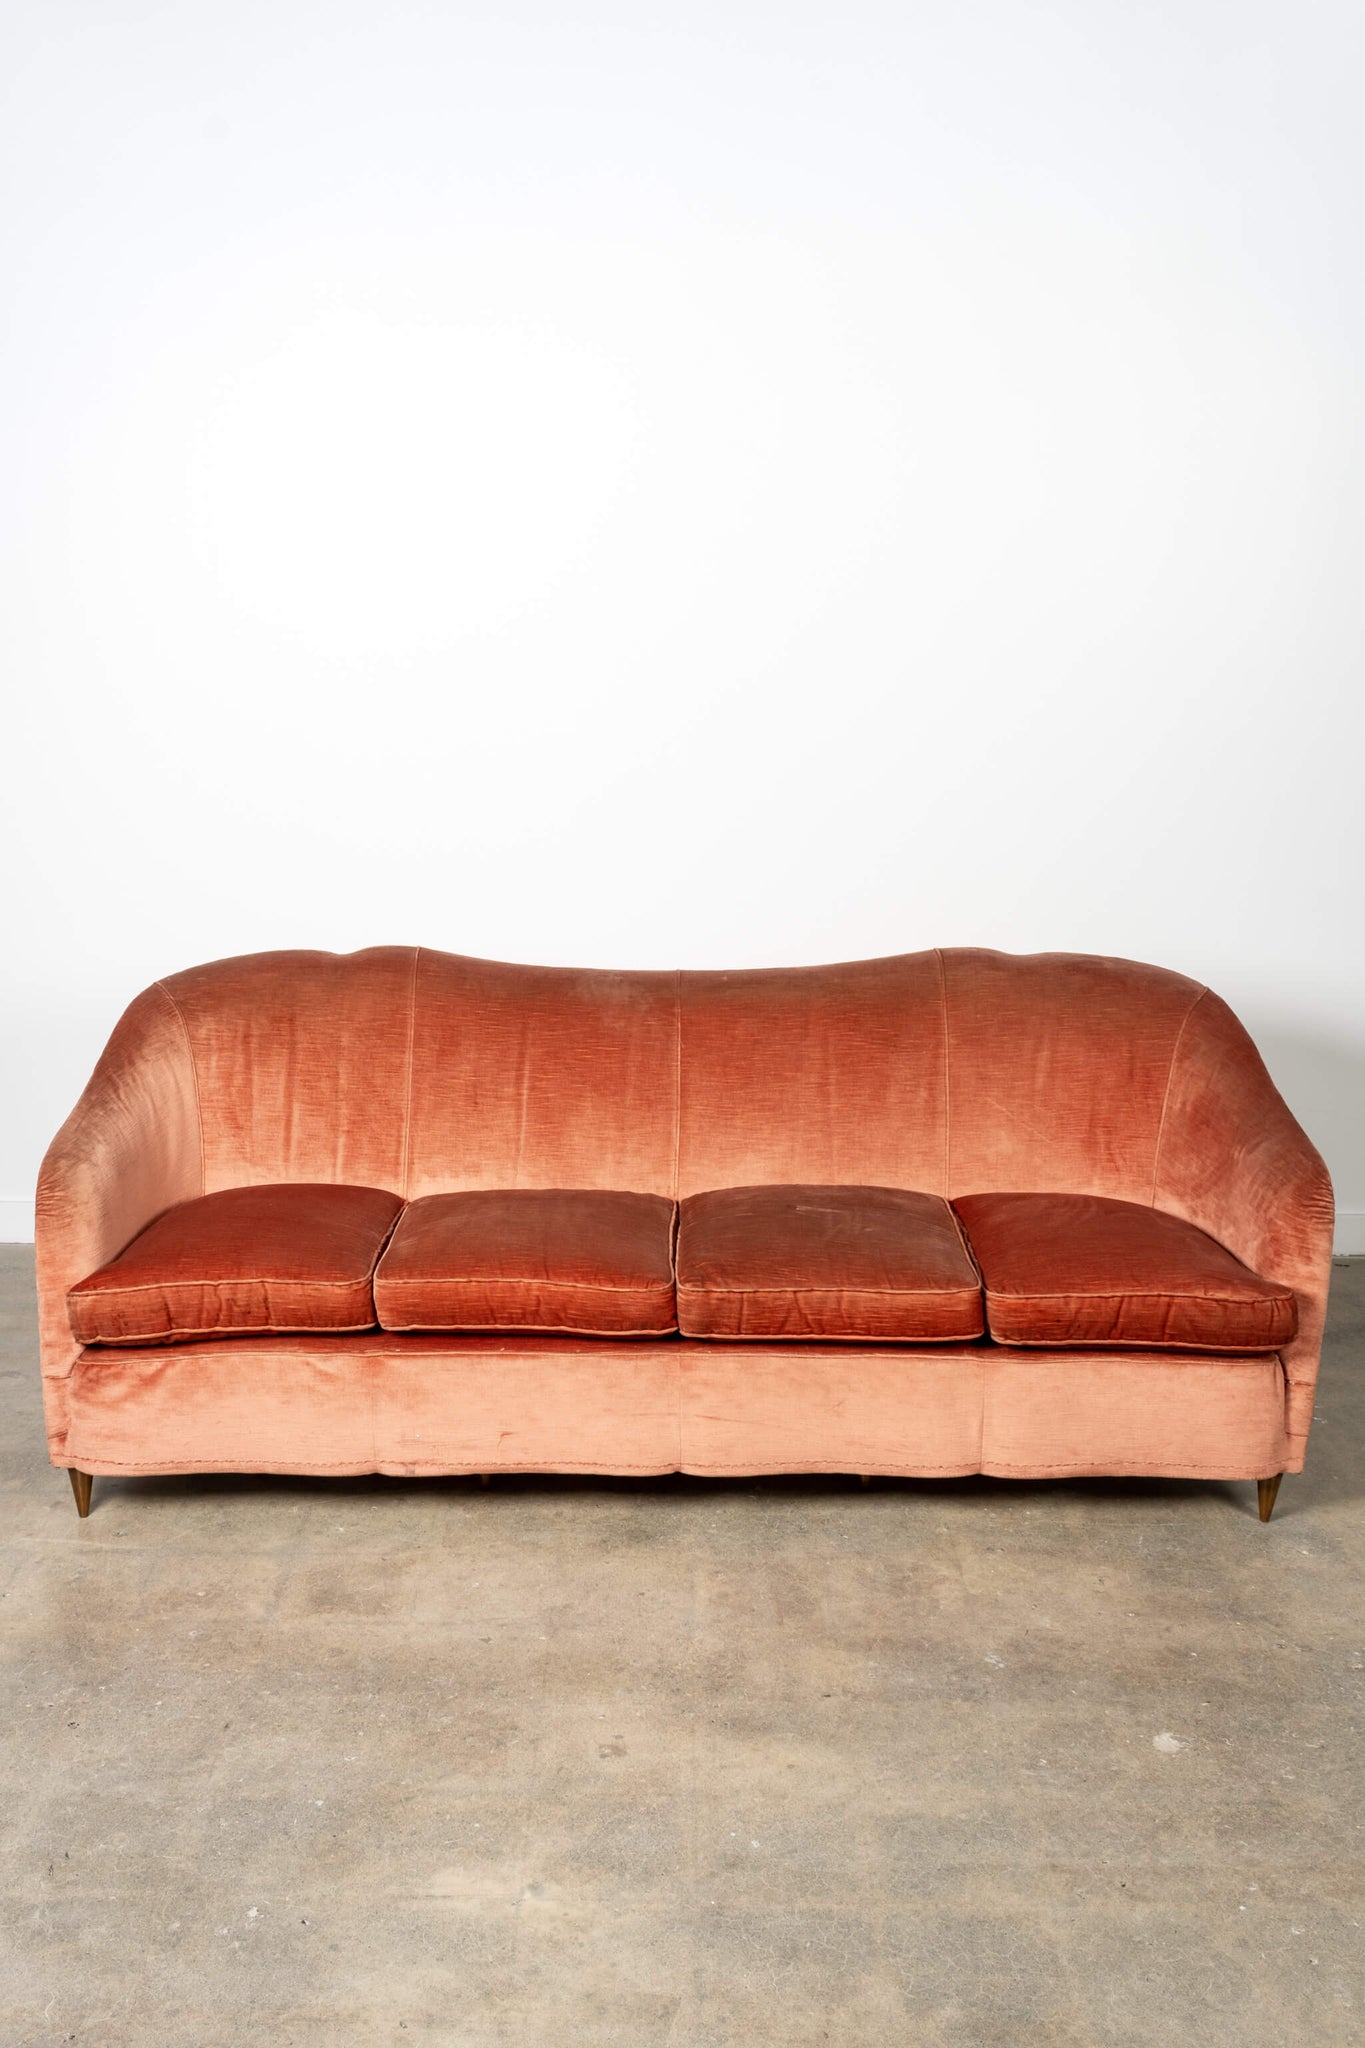 Extremely Rare Vintage Pink Orange Sofa with Curved Frame Detail Casa Giardino Gio Ponti, front view